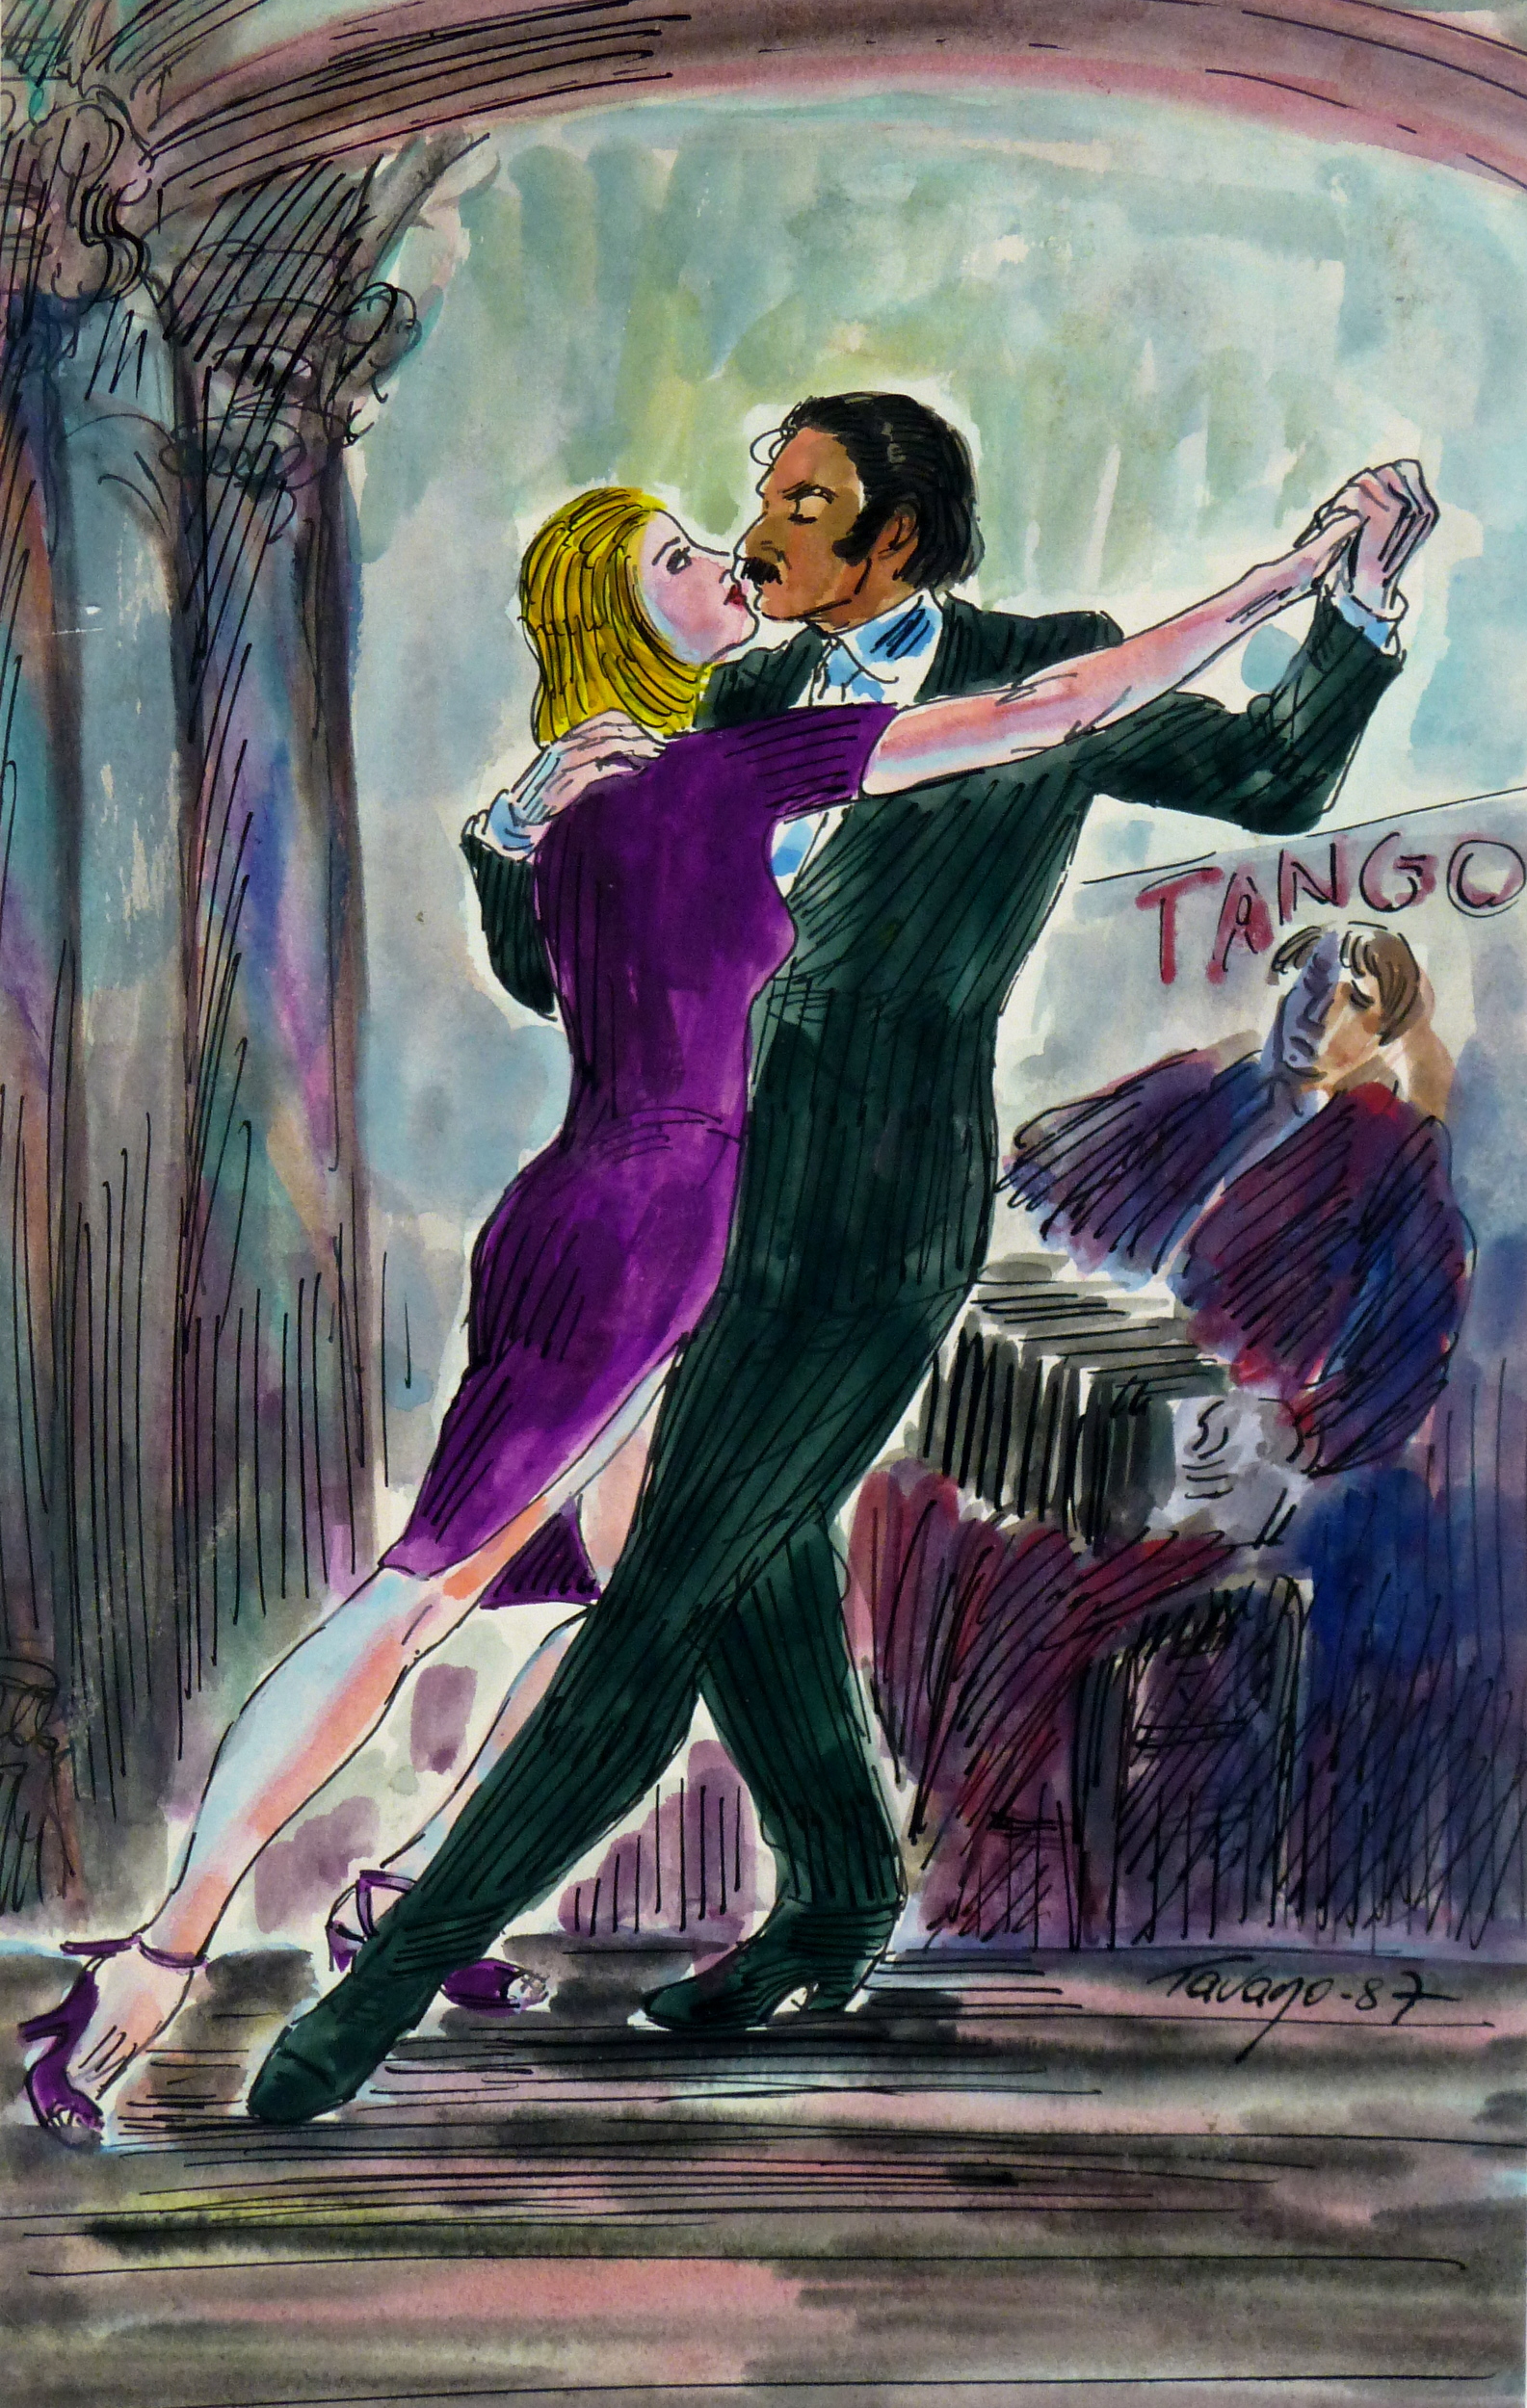 Tango Watercolor by Tavano, 1987